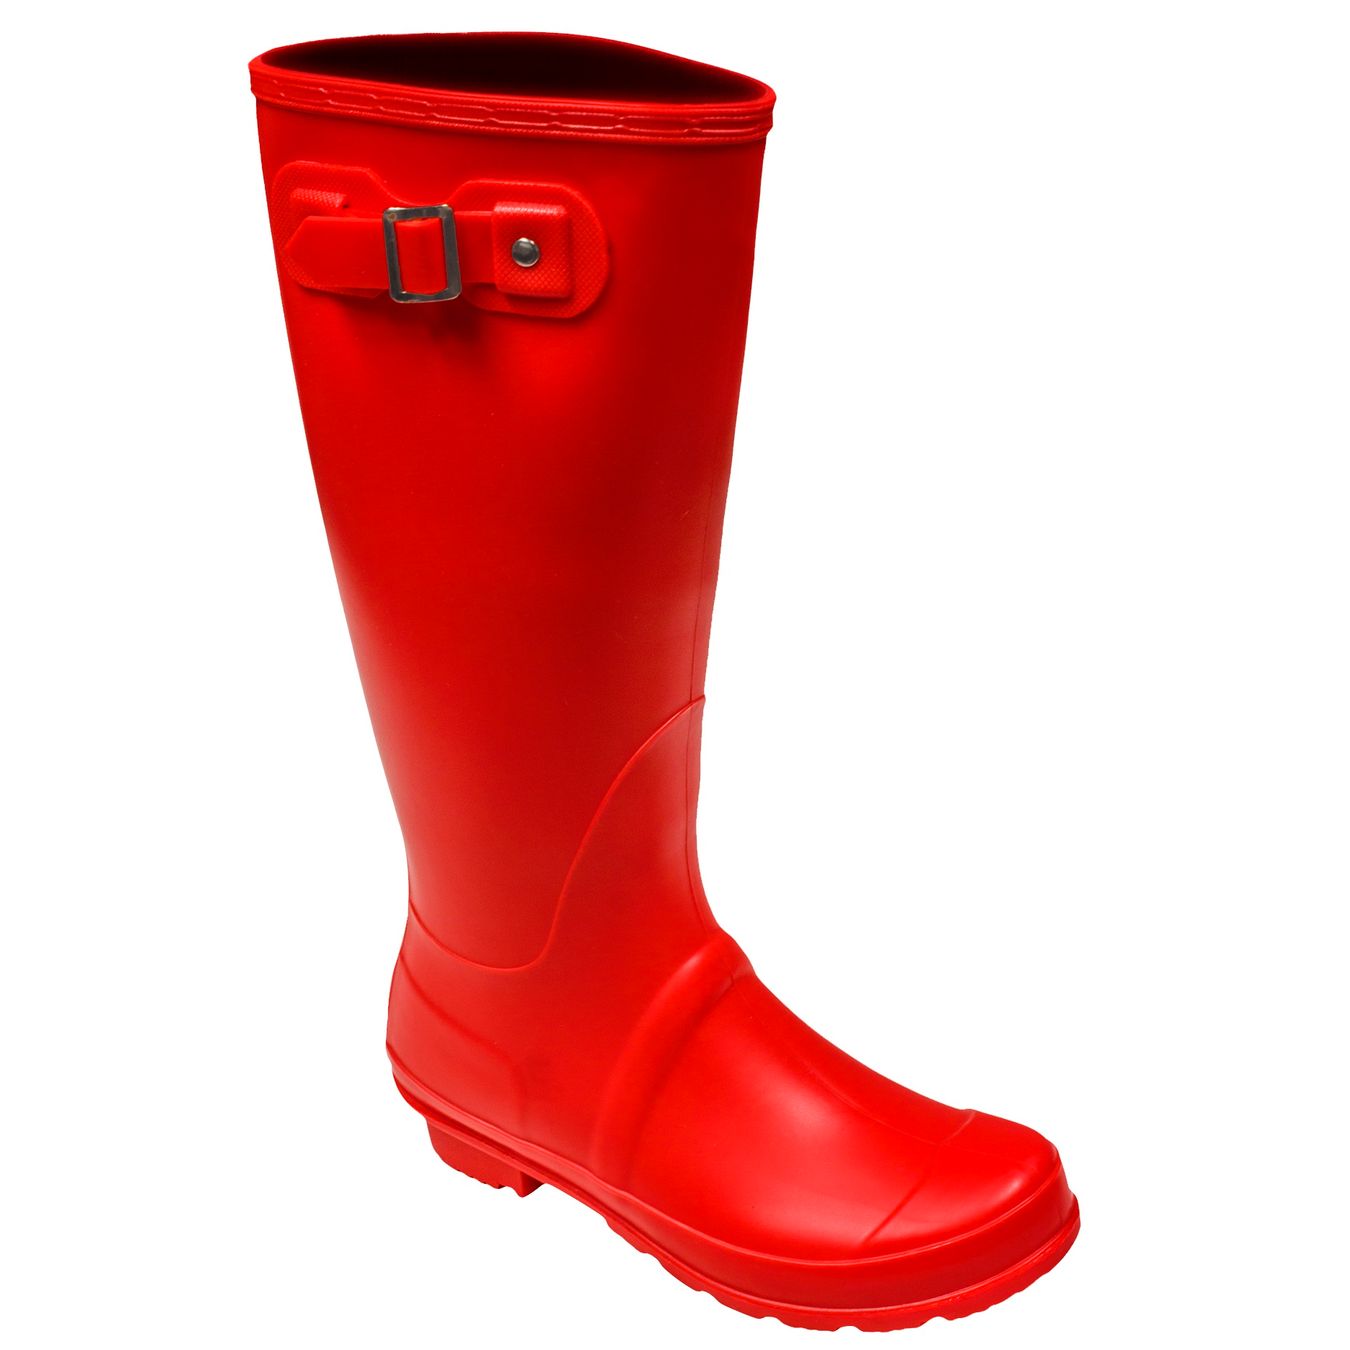 Bottes de pluie "Balmoral" - Femme||"Balmoral" rain boots - Women's